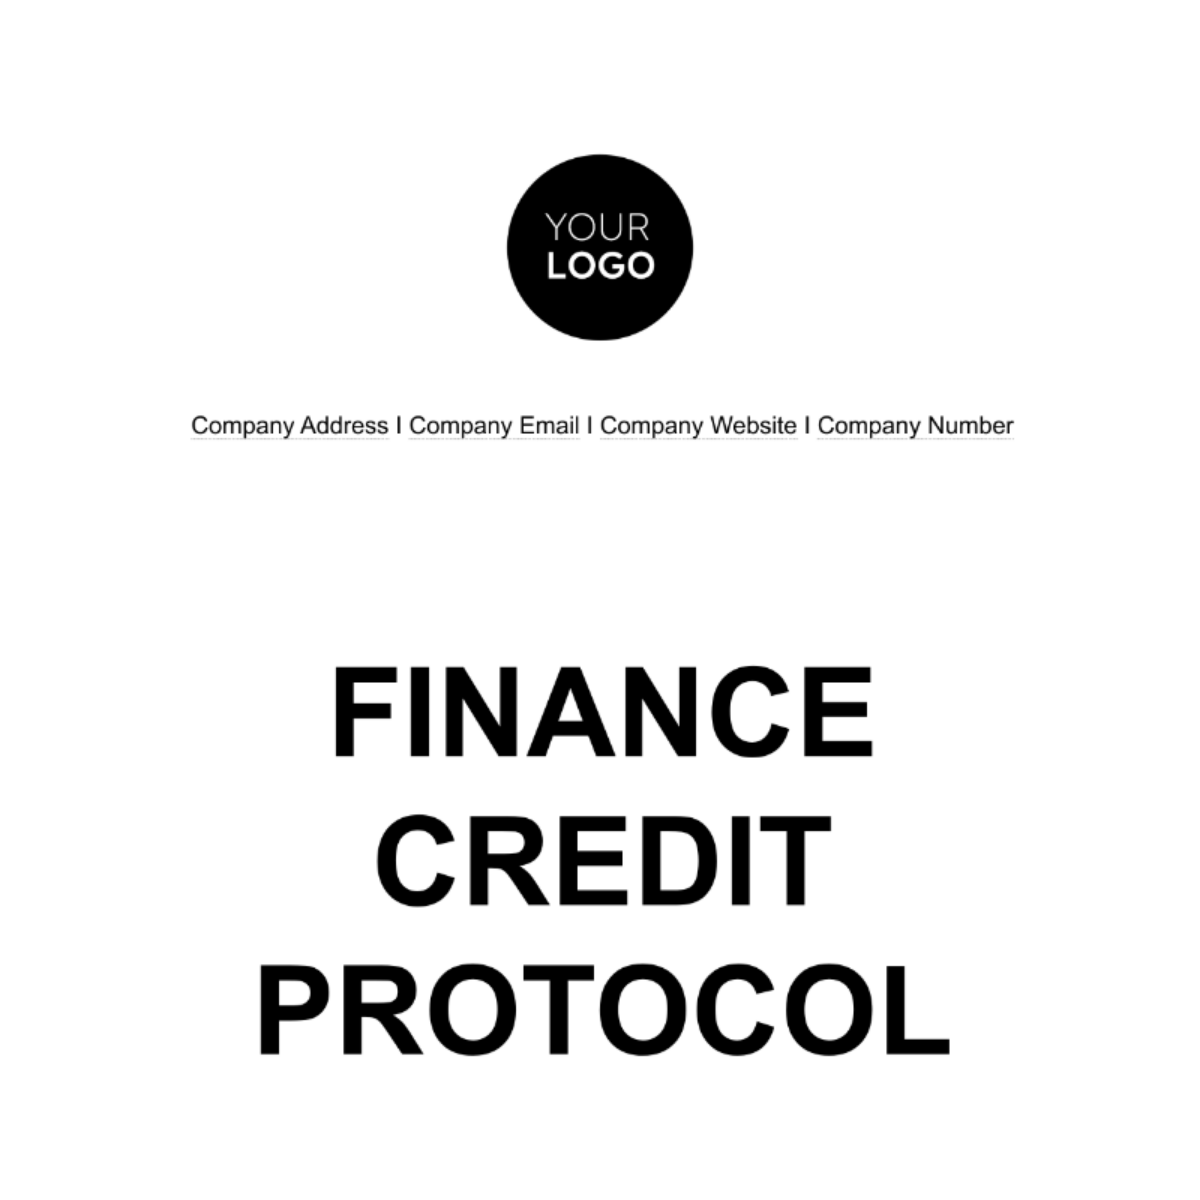 Finance Credit Protocol Template